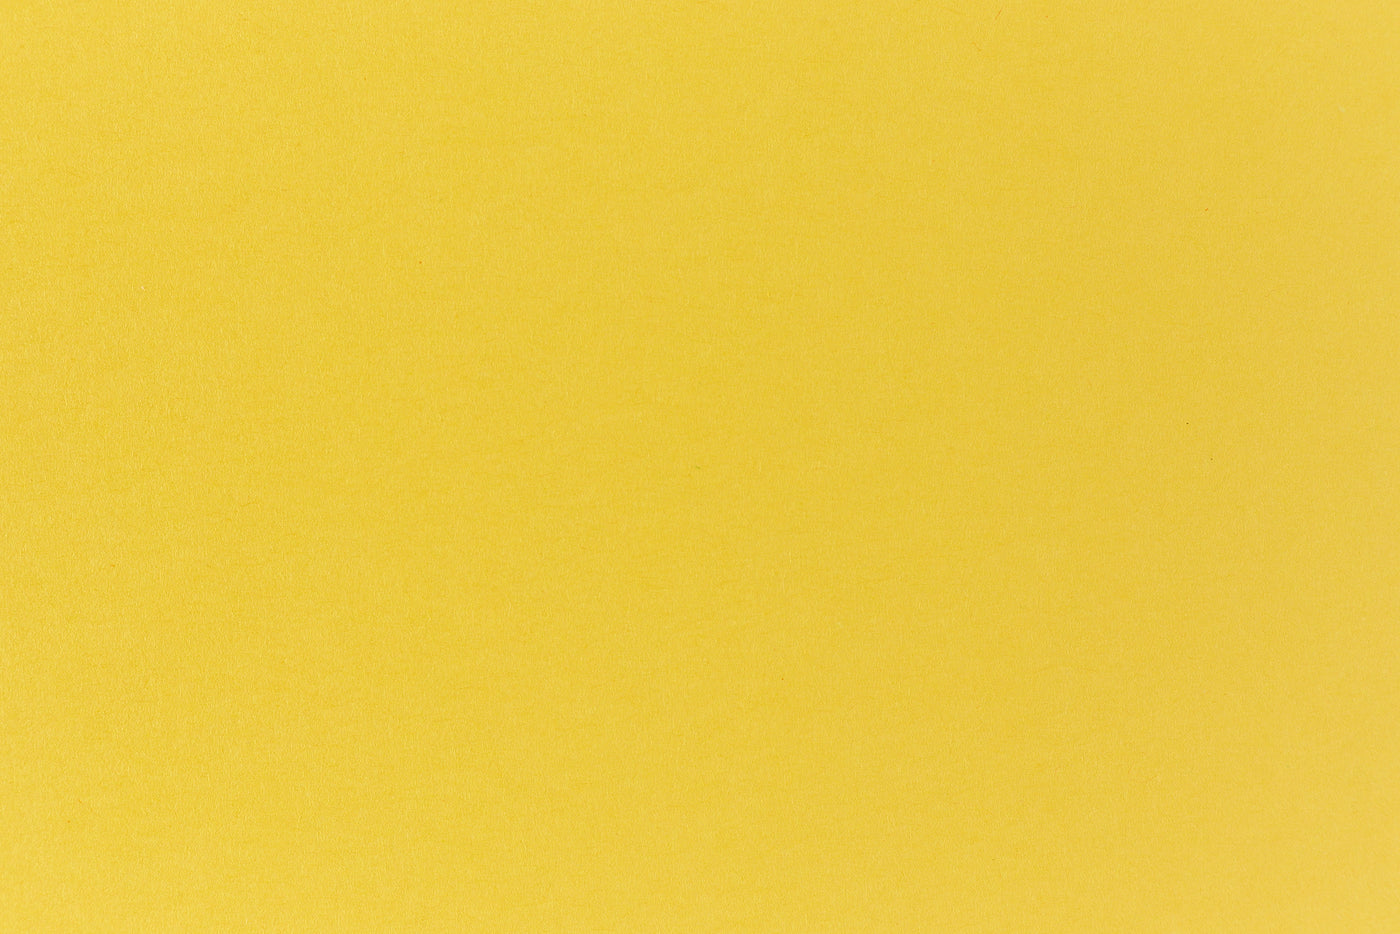 Bright yellow paper sample.